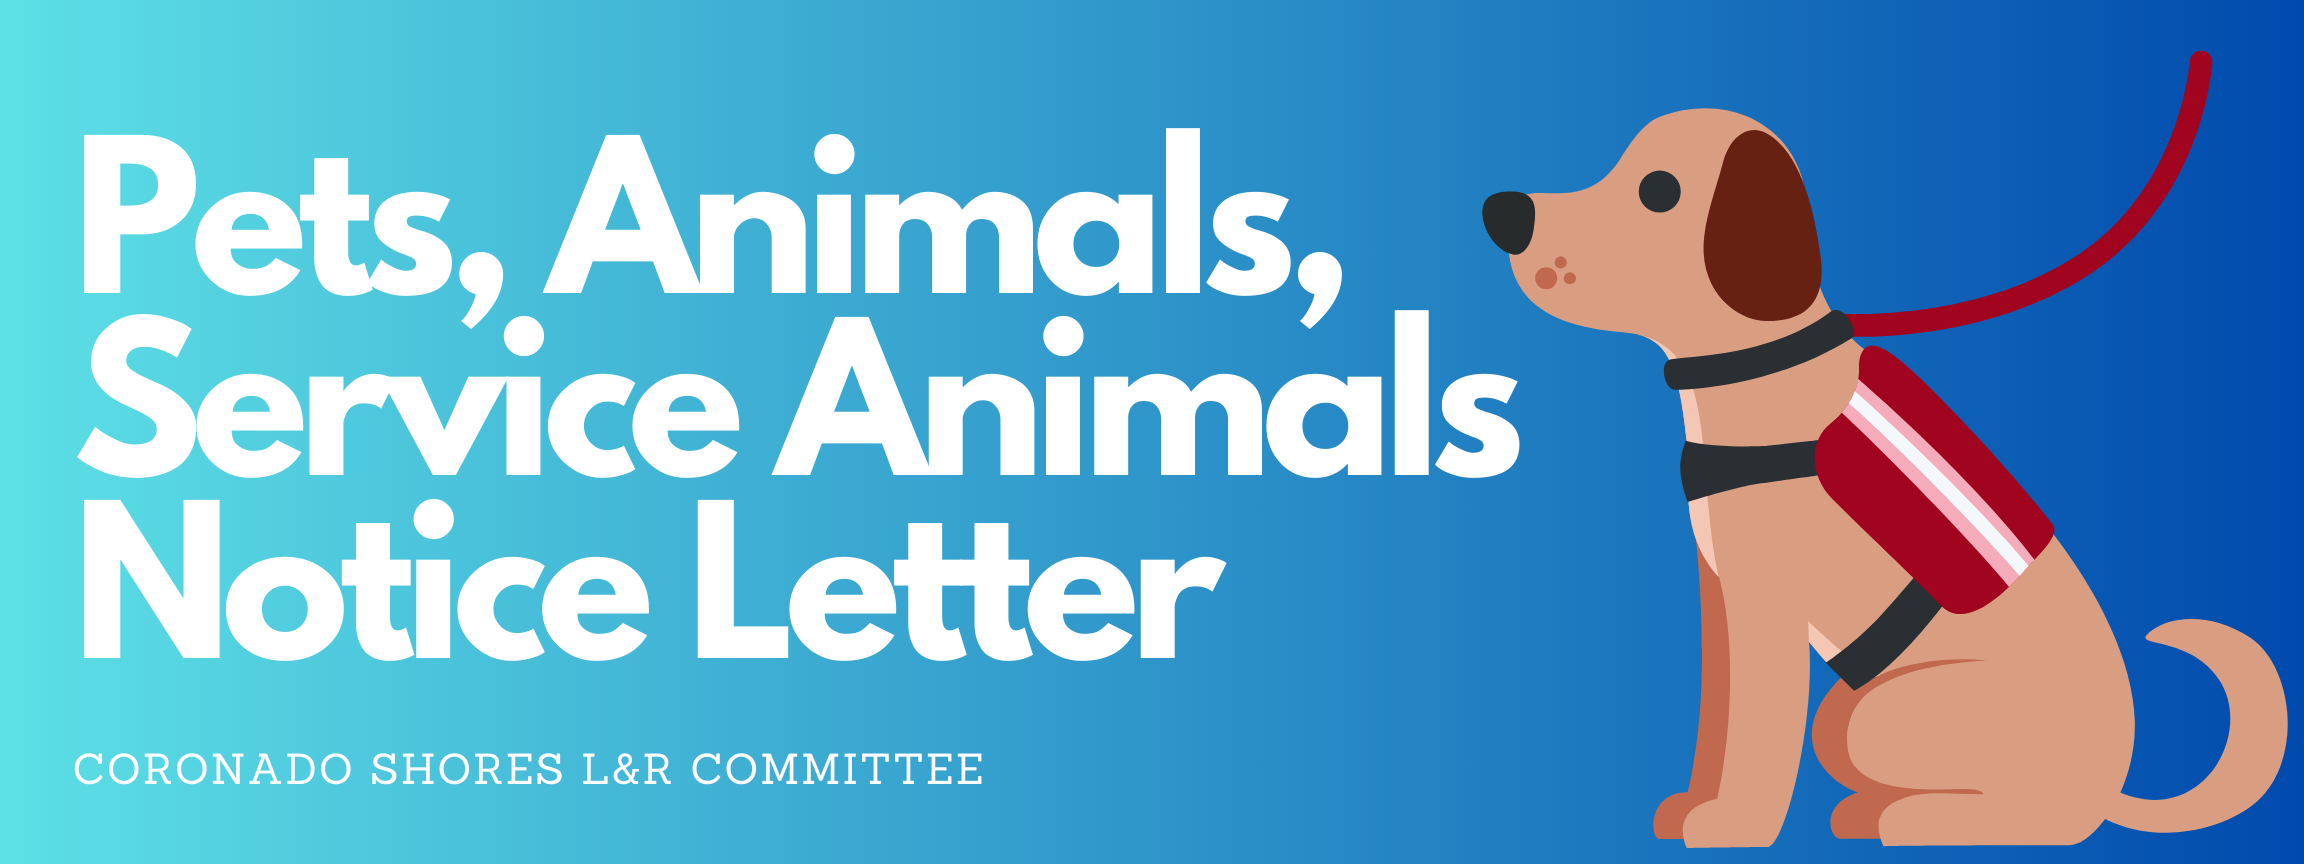 Pets, Animals, Service Animals Notice Letter